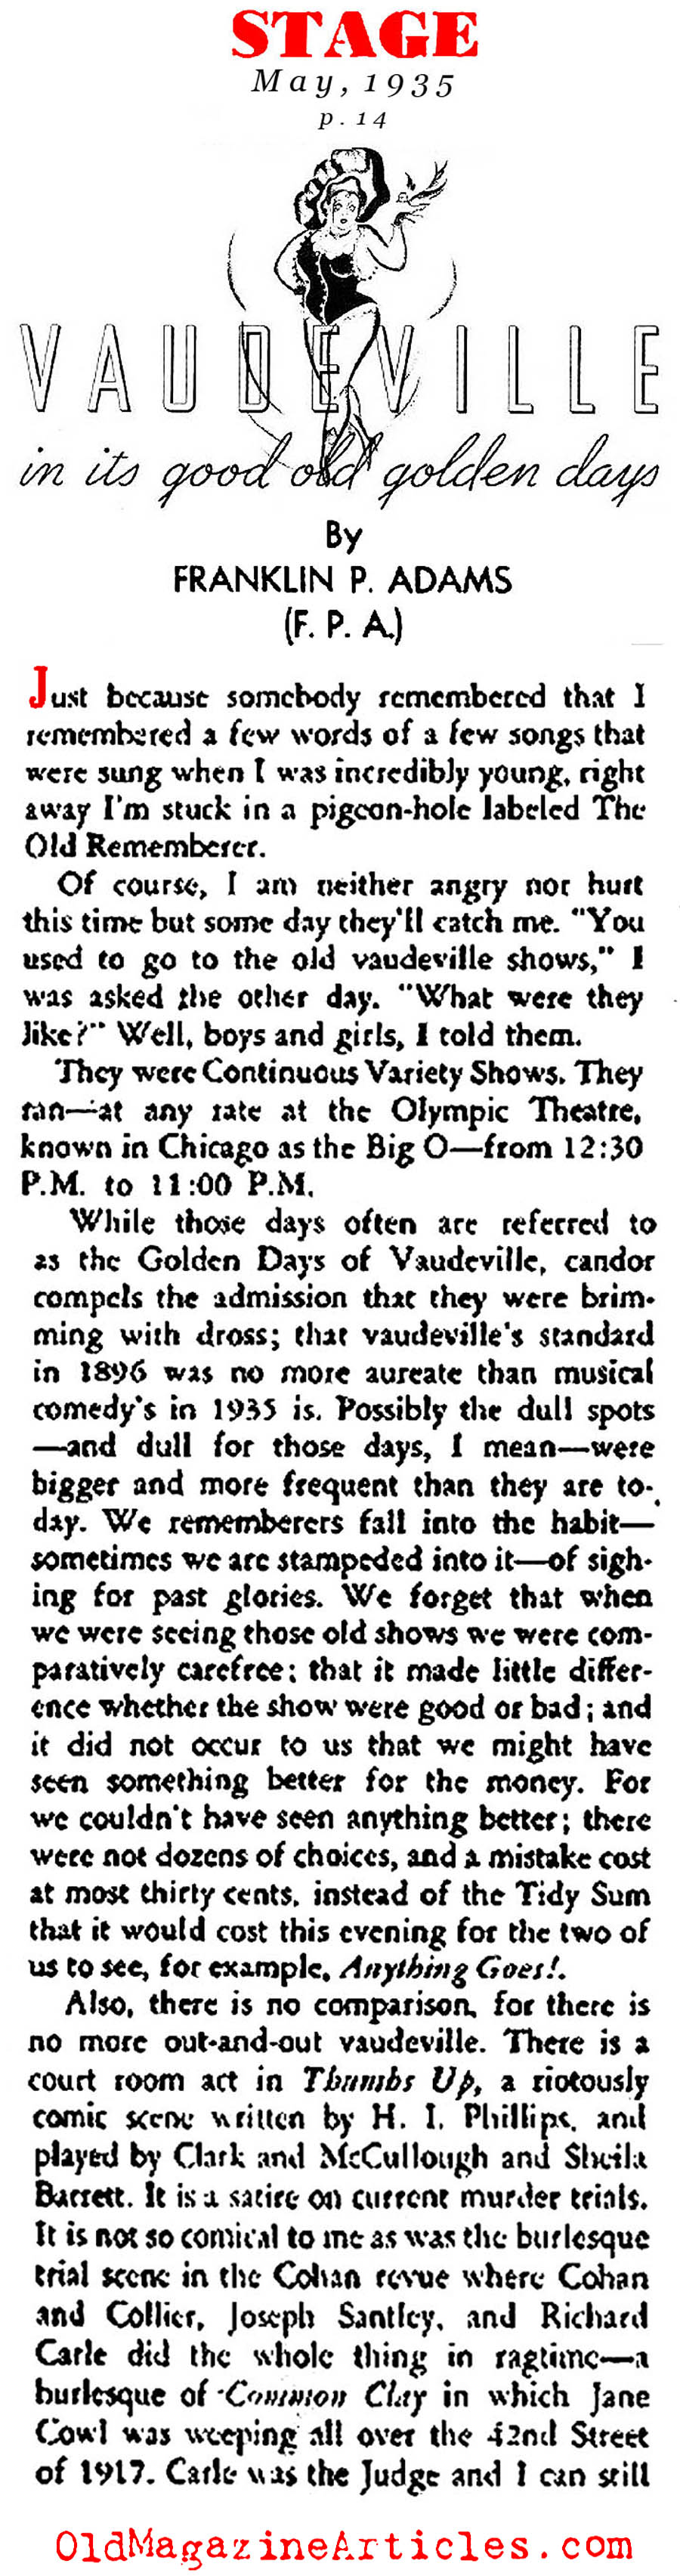 Chicago Vaudeville Remembered (Stage Magazine, 1935)